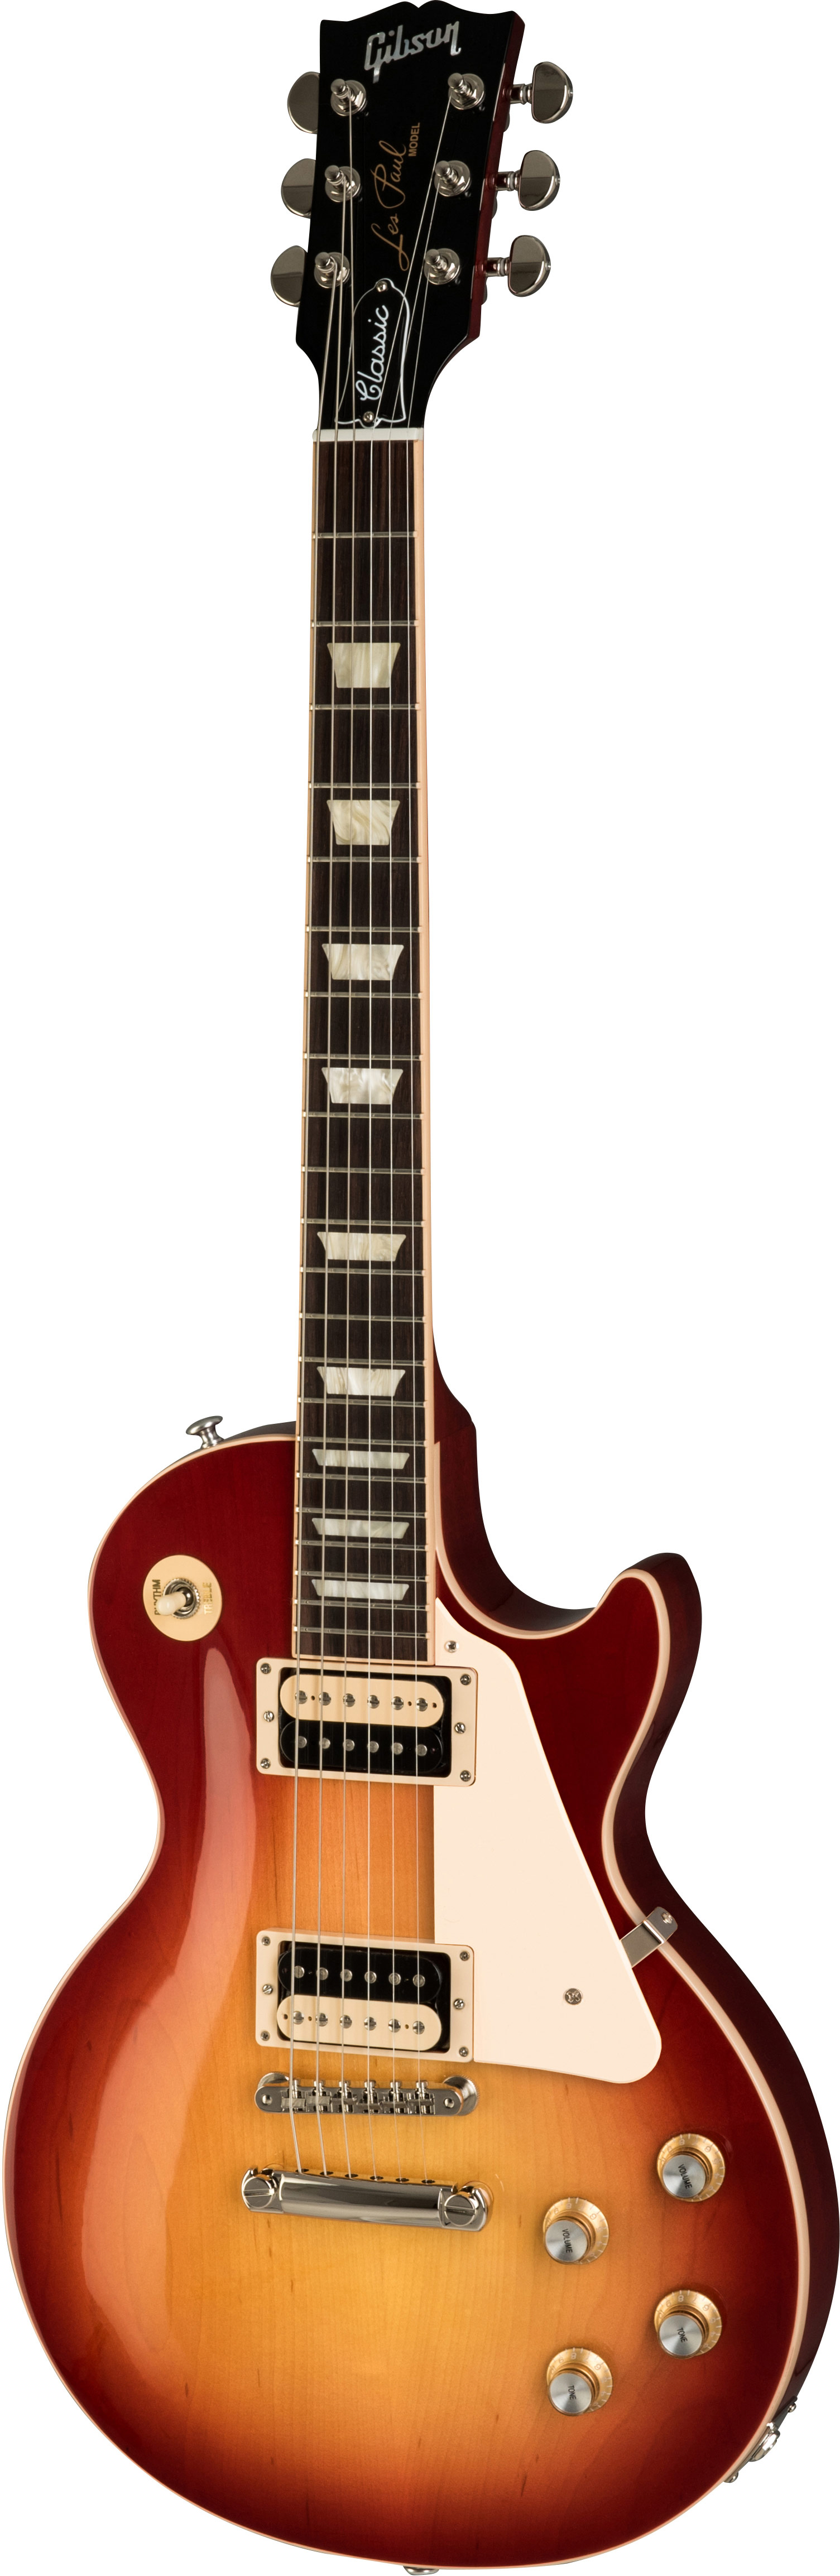 Gibson Les Paul Classic | guitarguitar